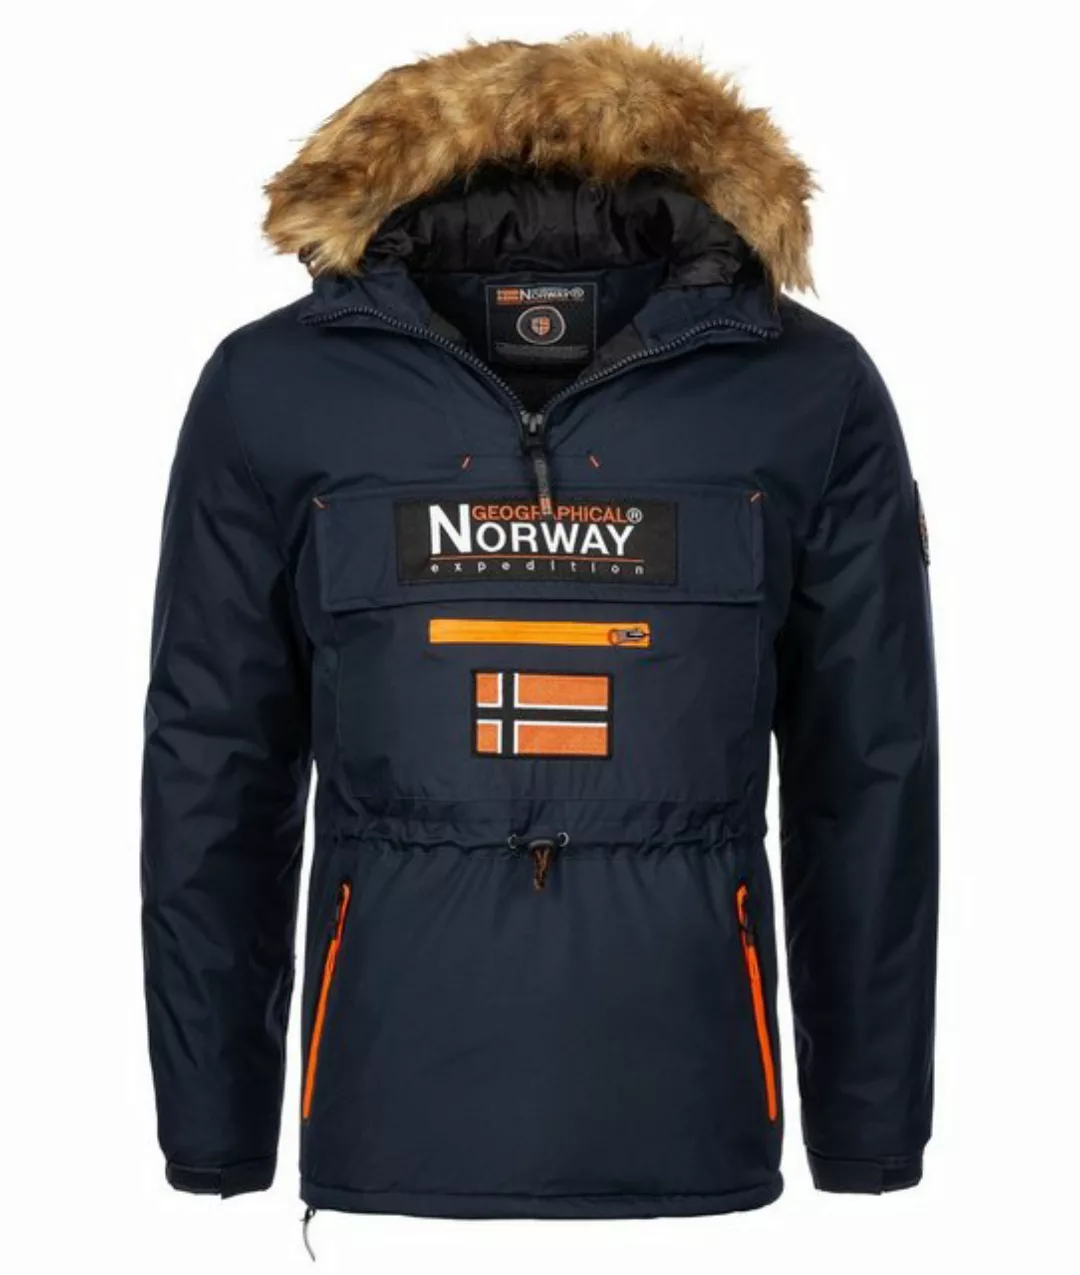 Geographical Norway Winterjacke Herren Anorak Winter Jacke günstig online kaufen